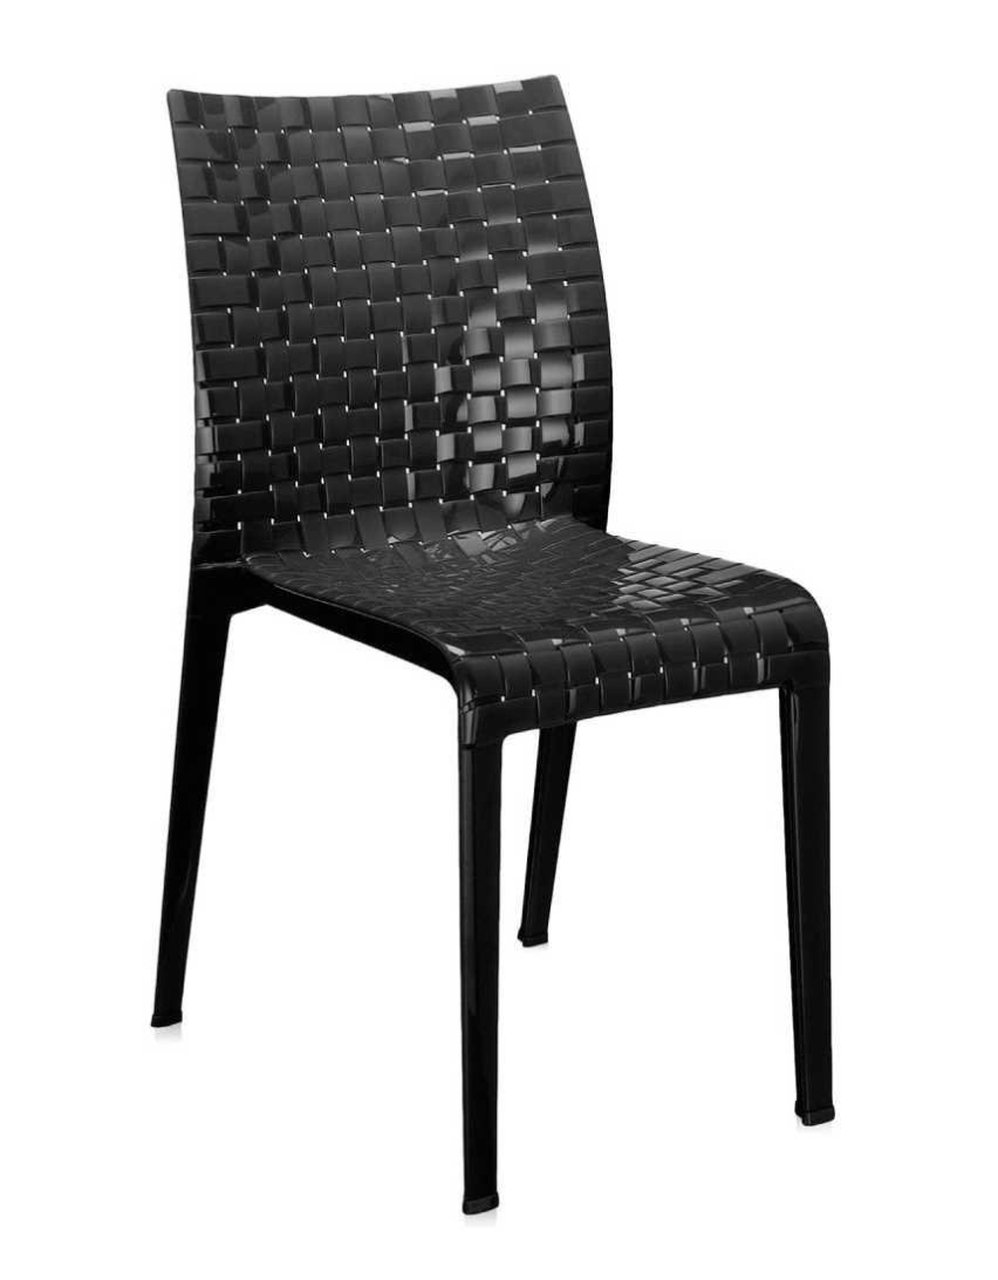 Image 2 of Kartel Ami Ami dining chairs (2 stuks)